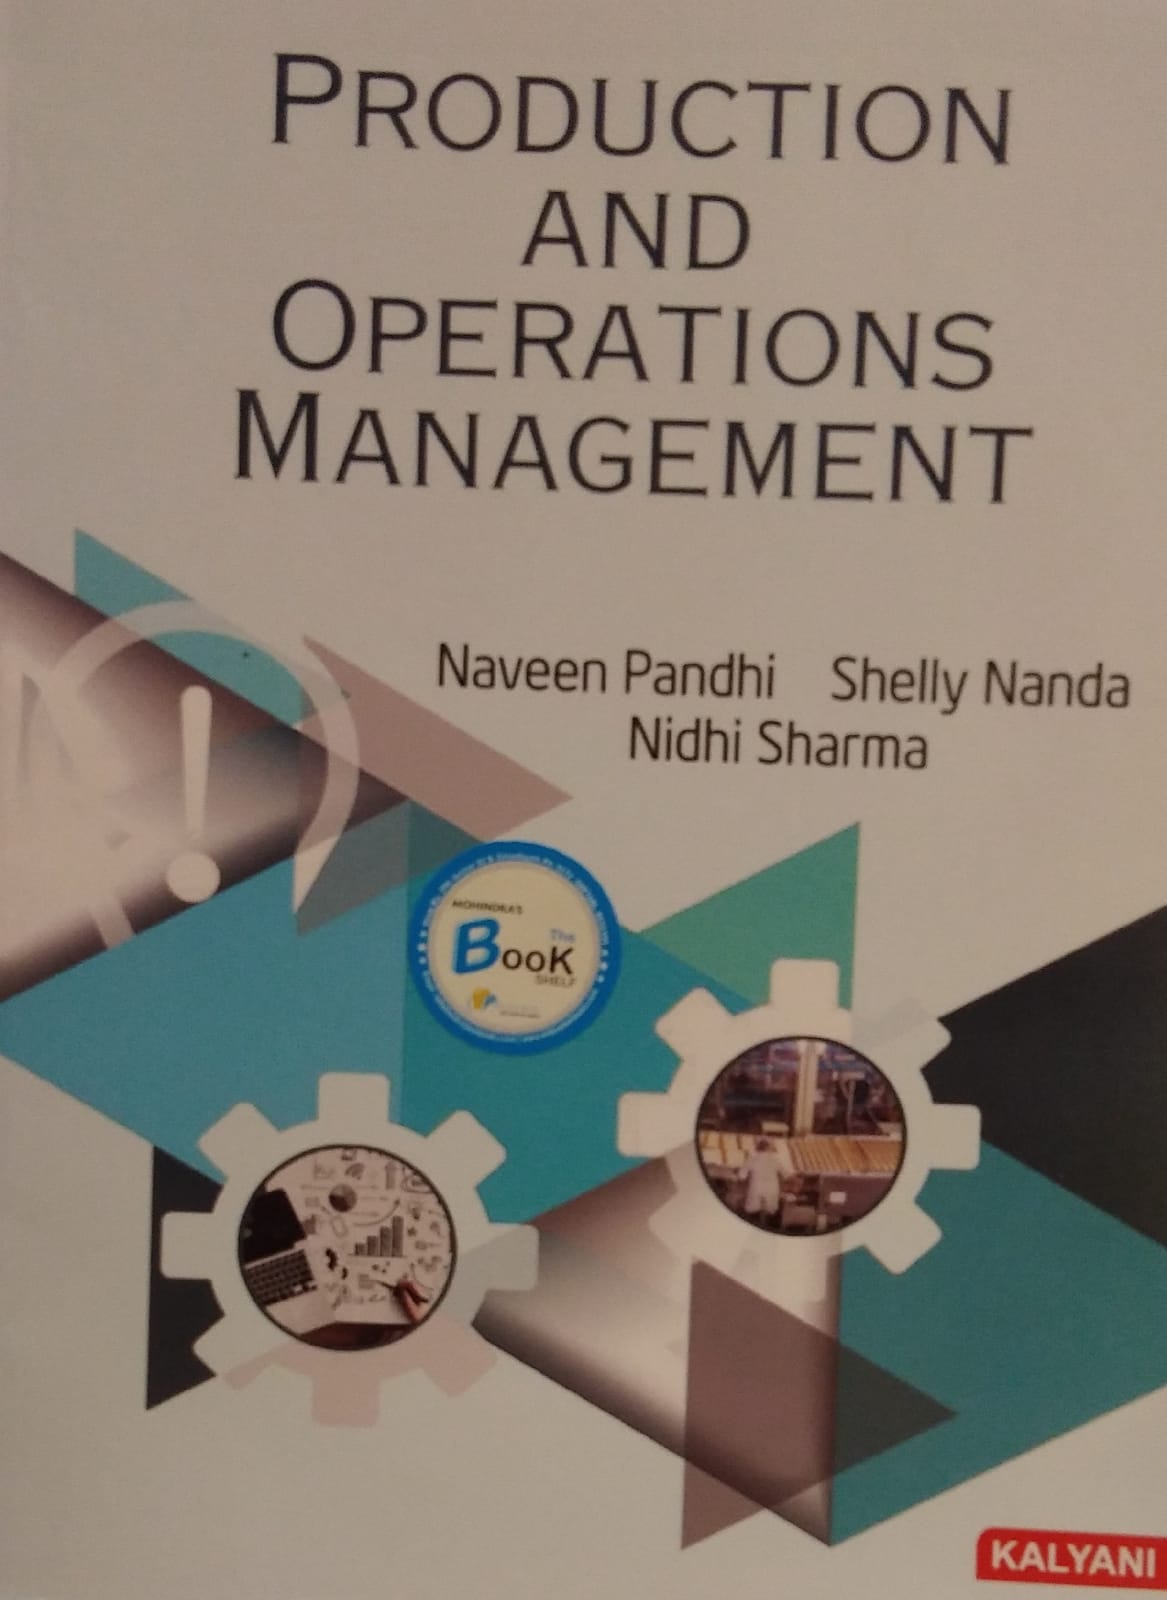 Kalyani Production & Operations Management for B.Com. 5th Sem. (P.U.) by Naveen Pandhi, Shelly Nanda & Nidhi Sharma, Edition 2023